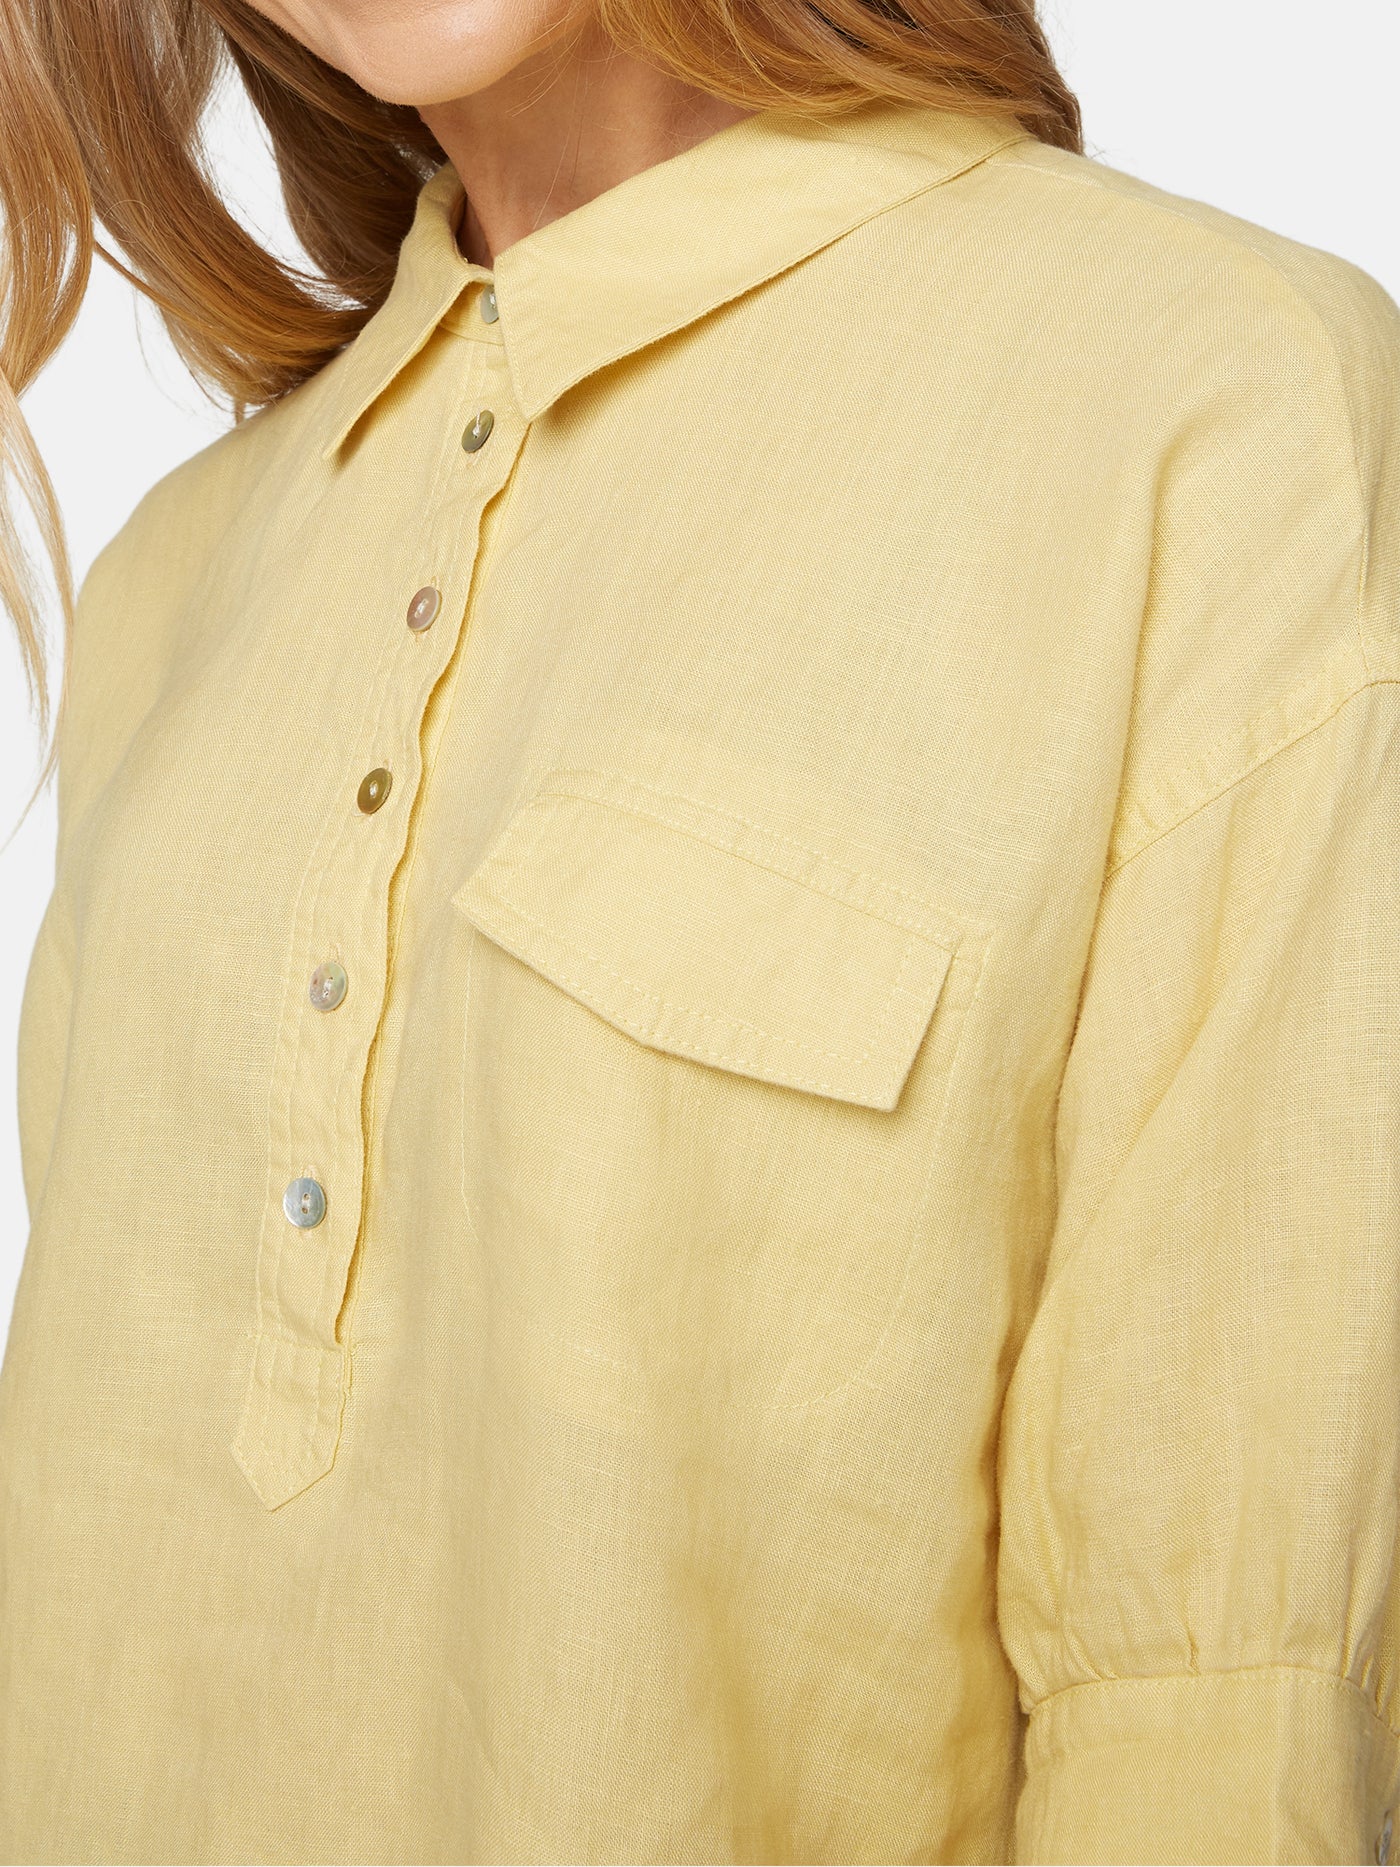 Skjorte i hør - Straw Yellow